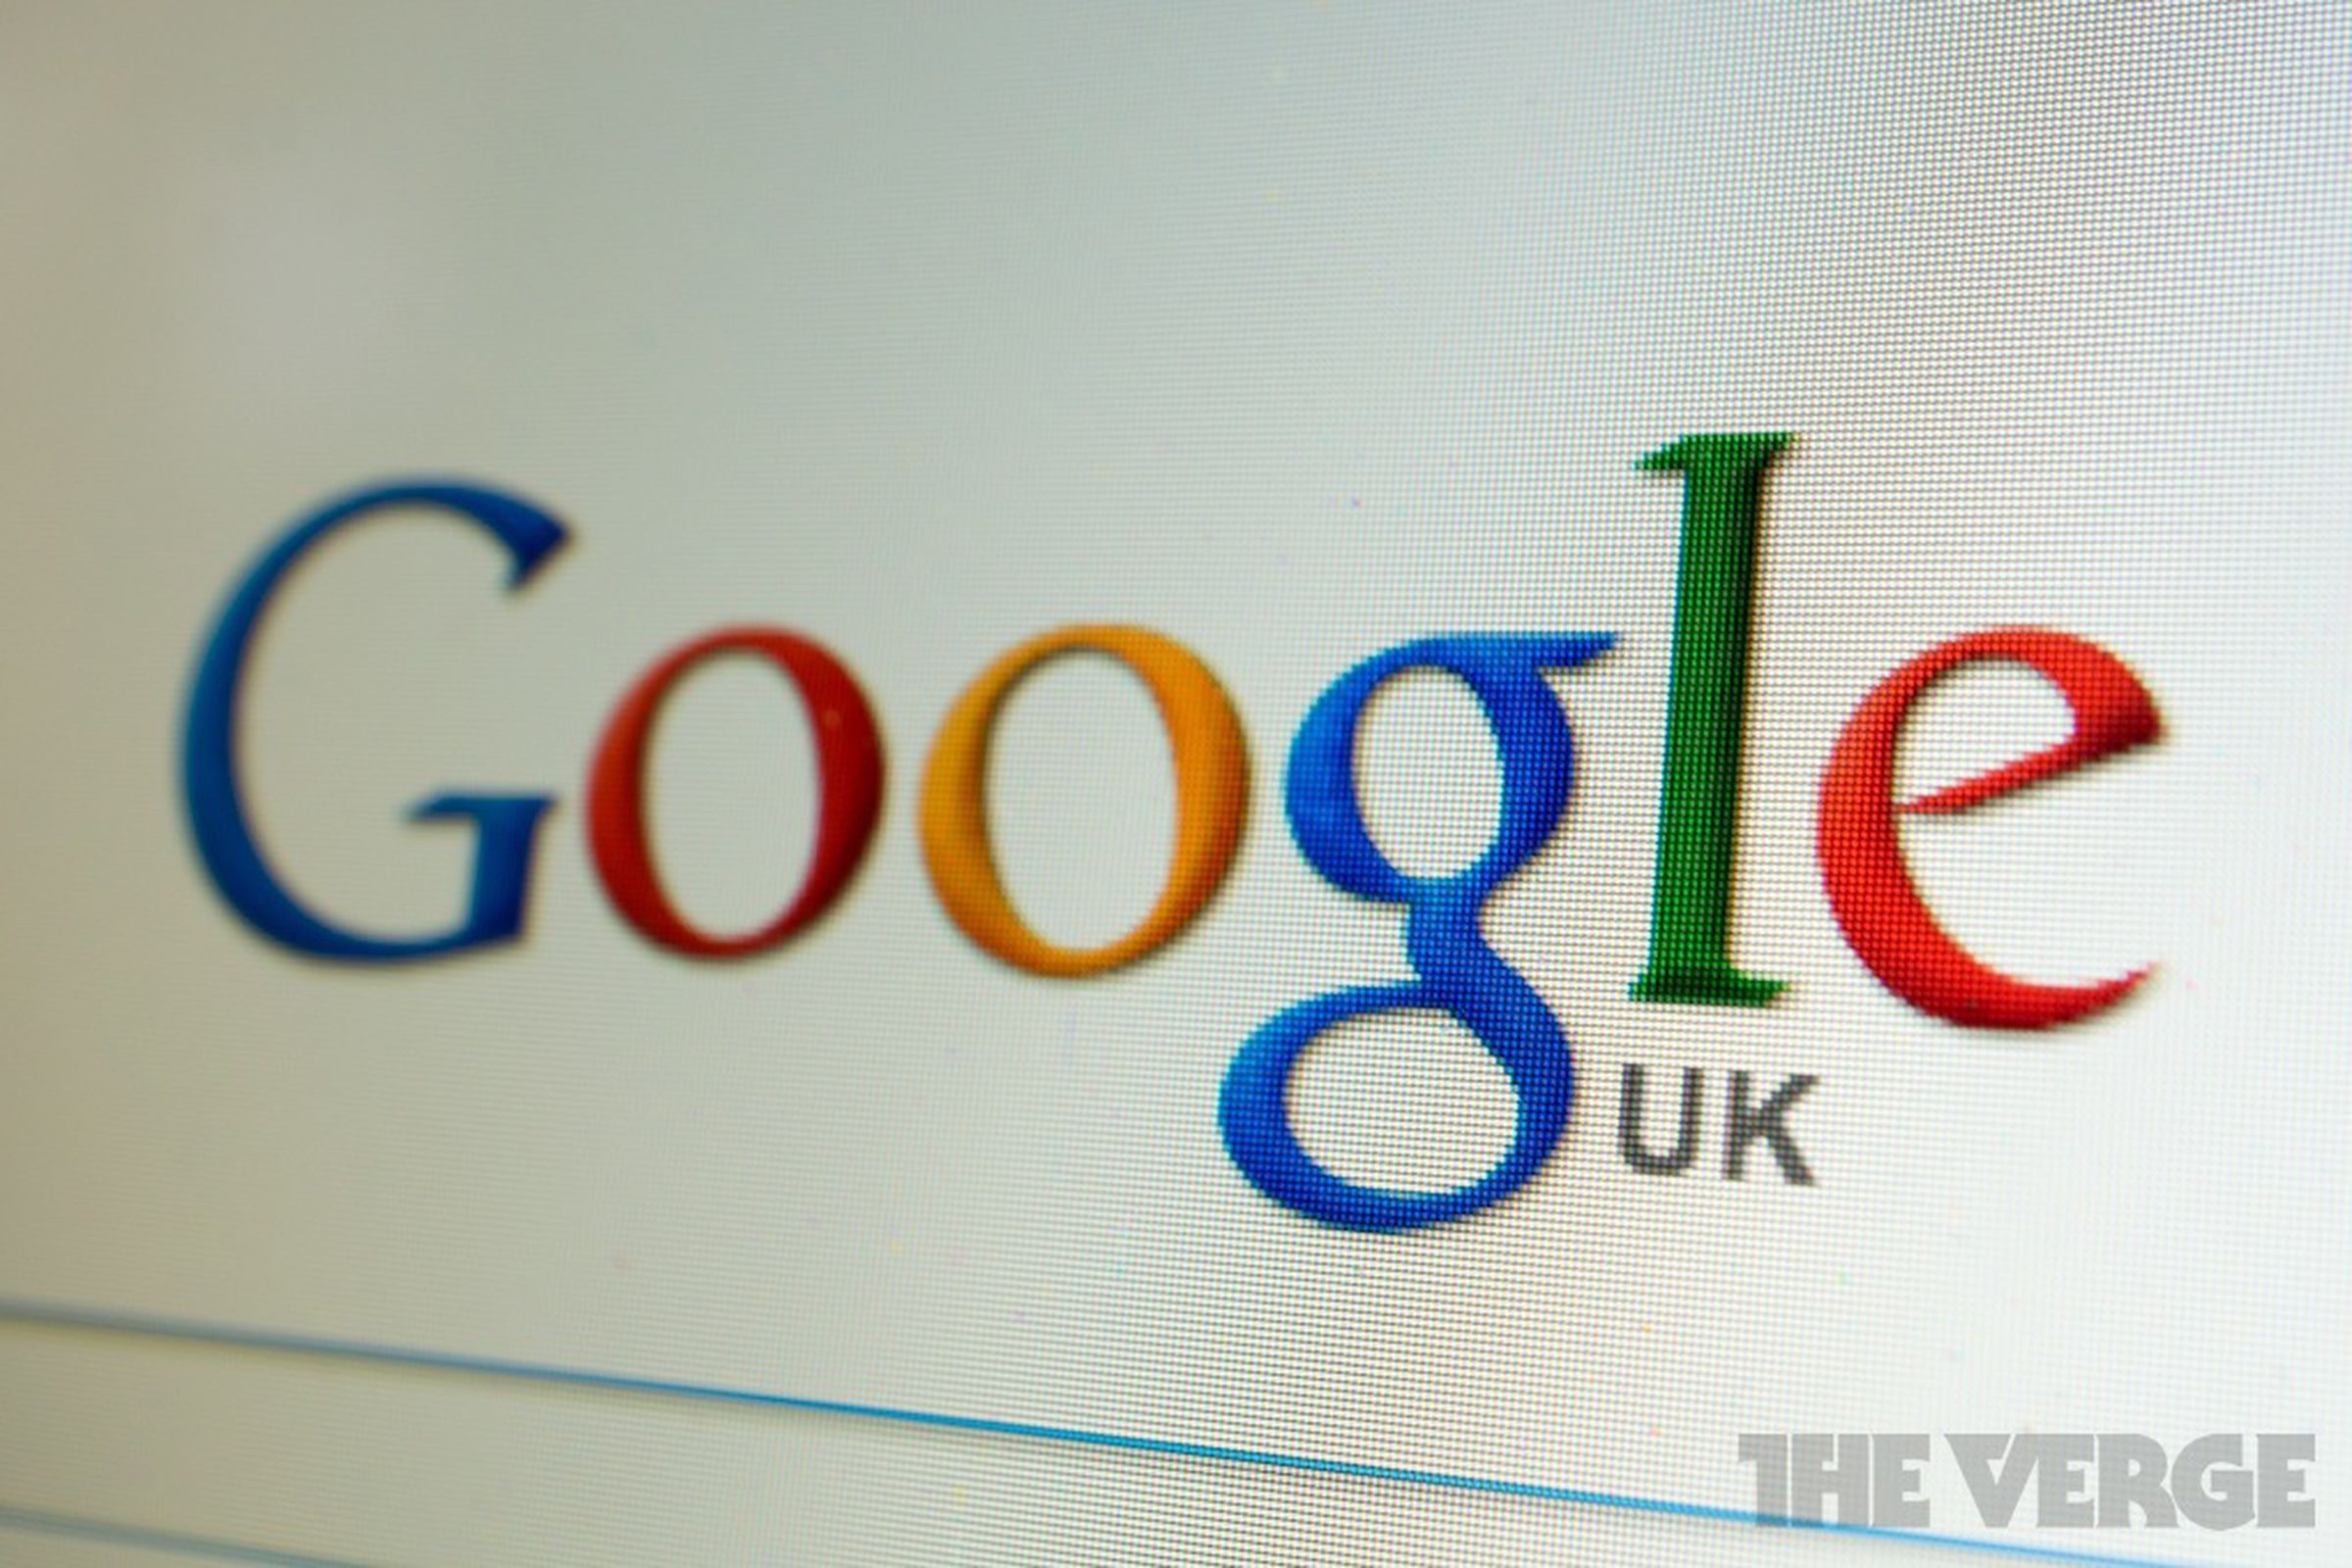 google uk logo stock 1020